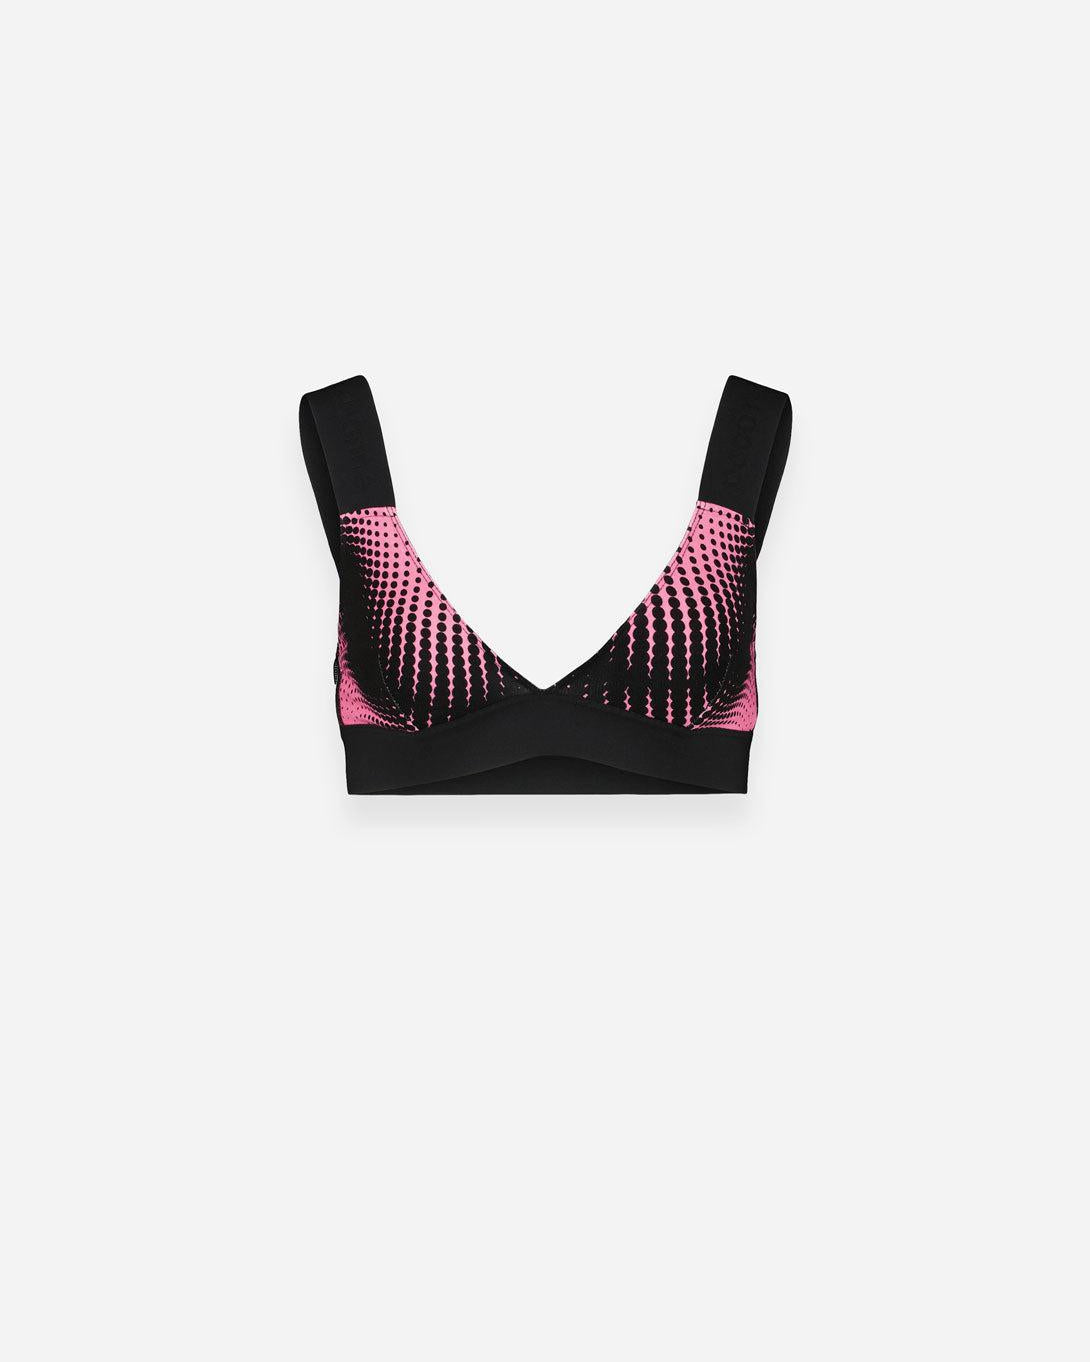 Pink bralette - Activewear - Paco Rabanne - Elevastor